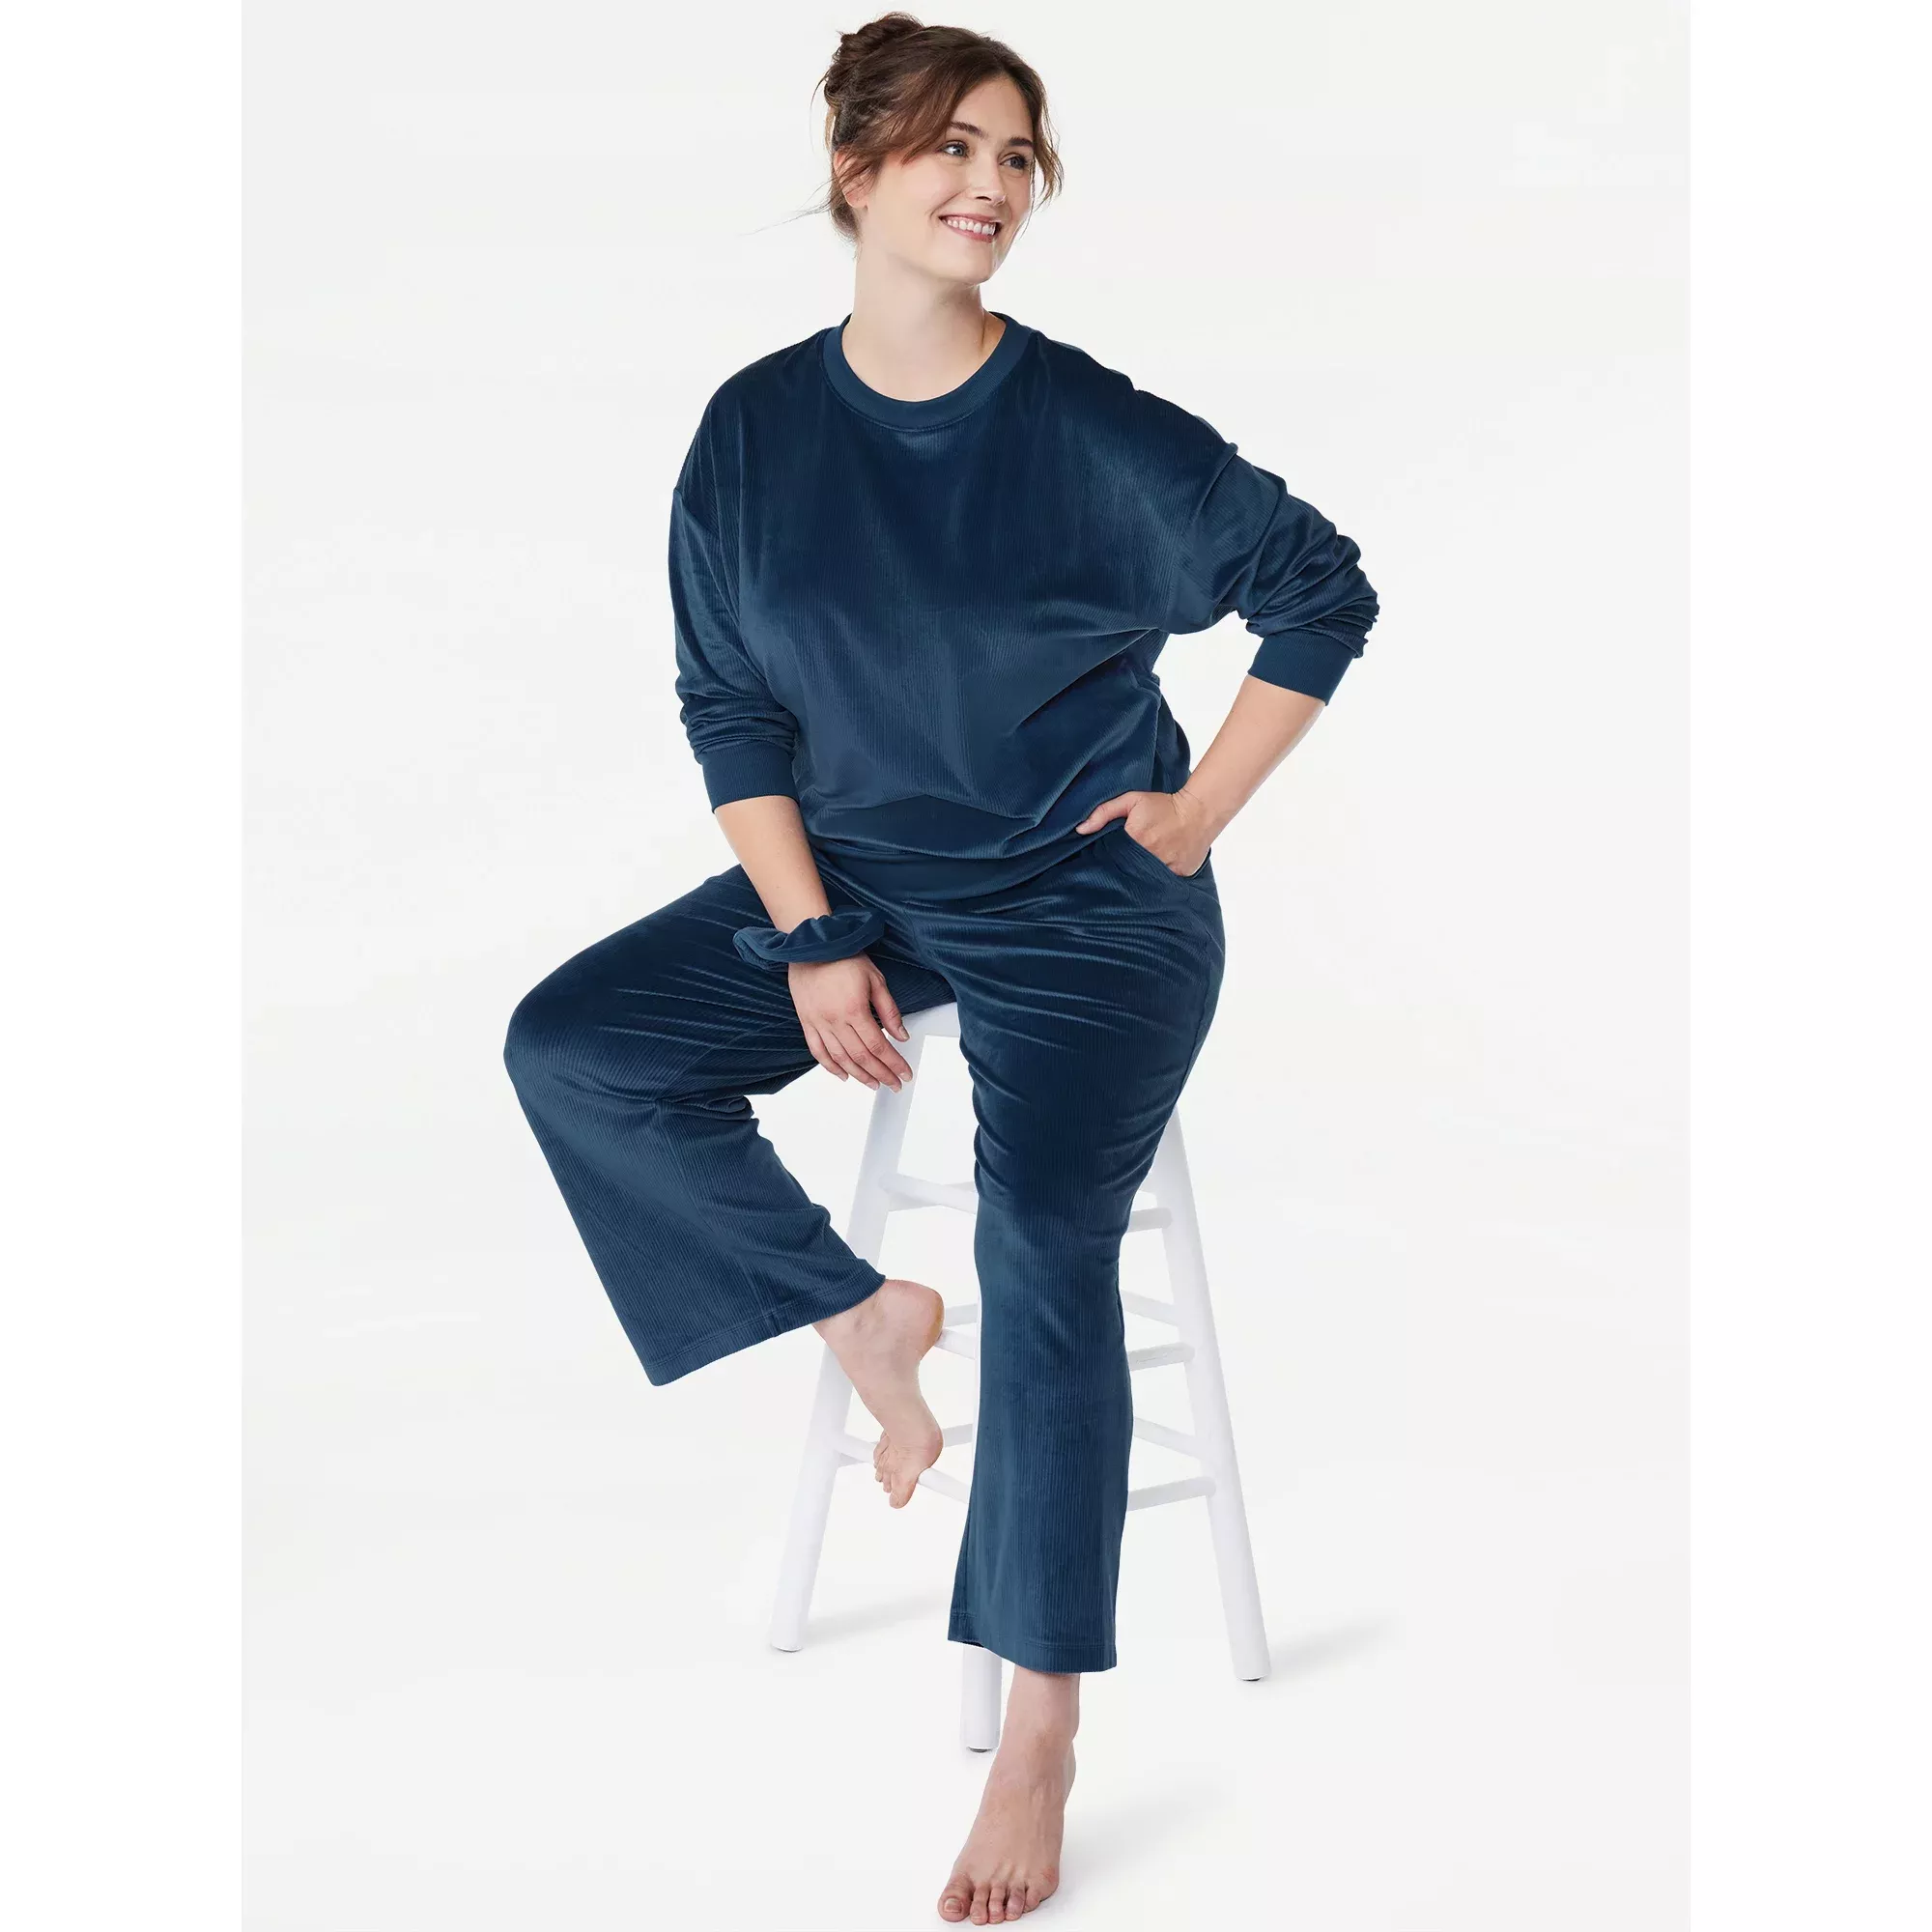 Joyspun Women's Ribbed Knit Sleep Camisole, Sizes S to 3X